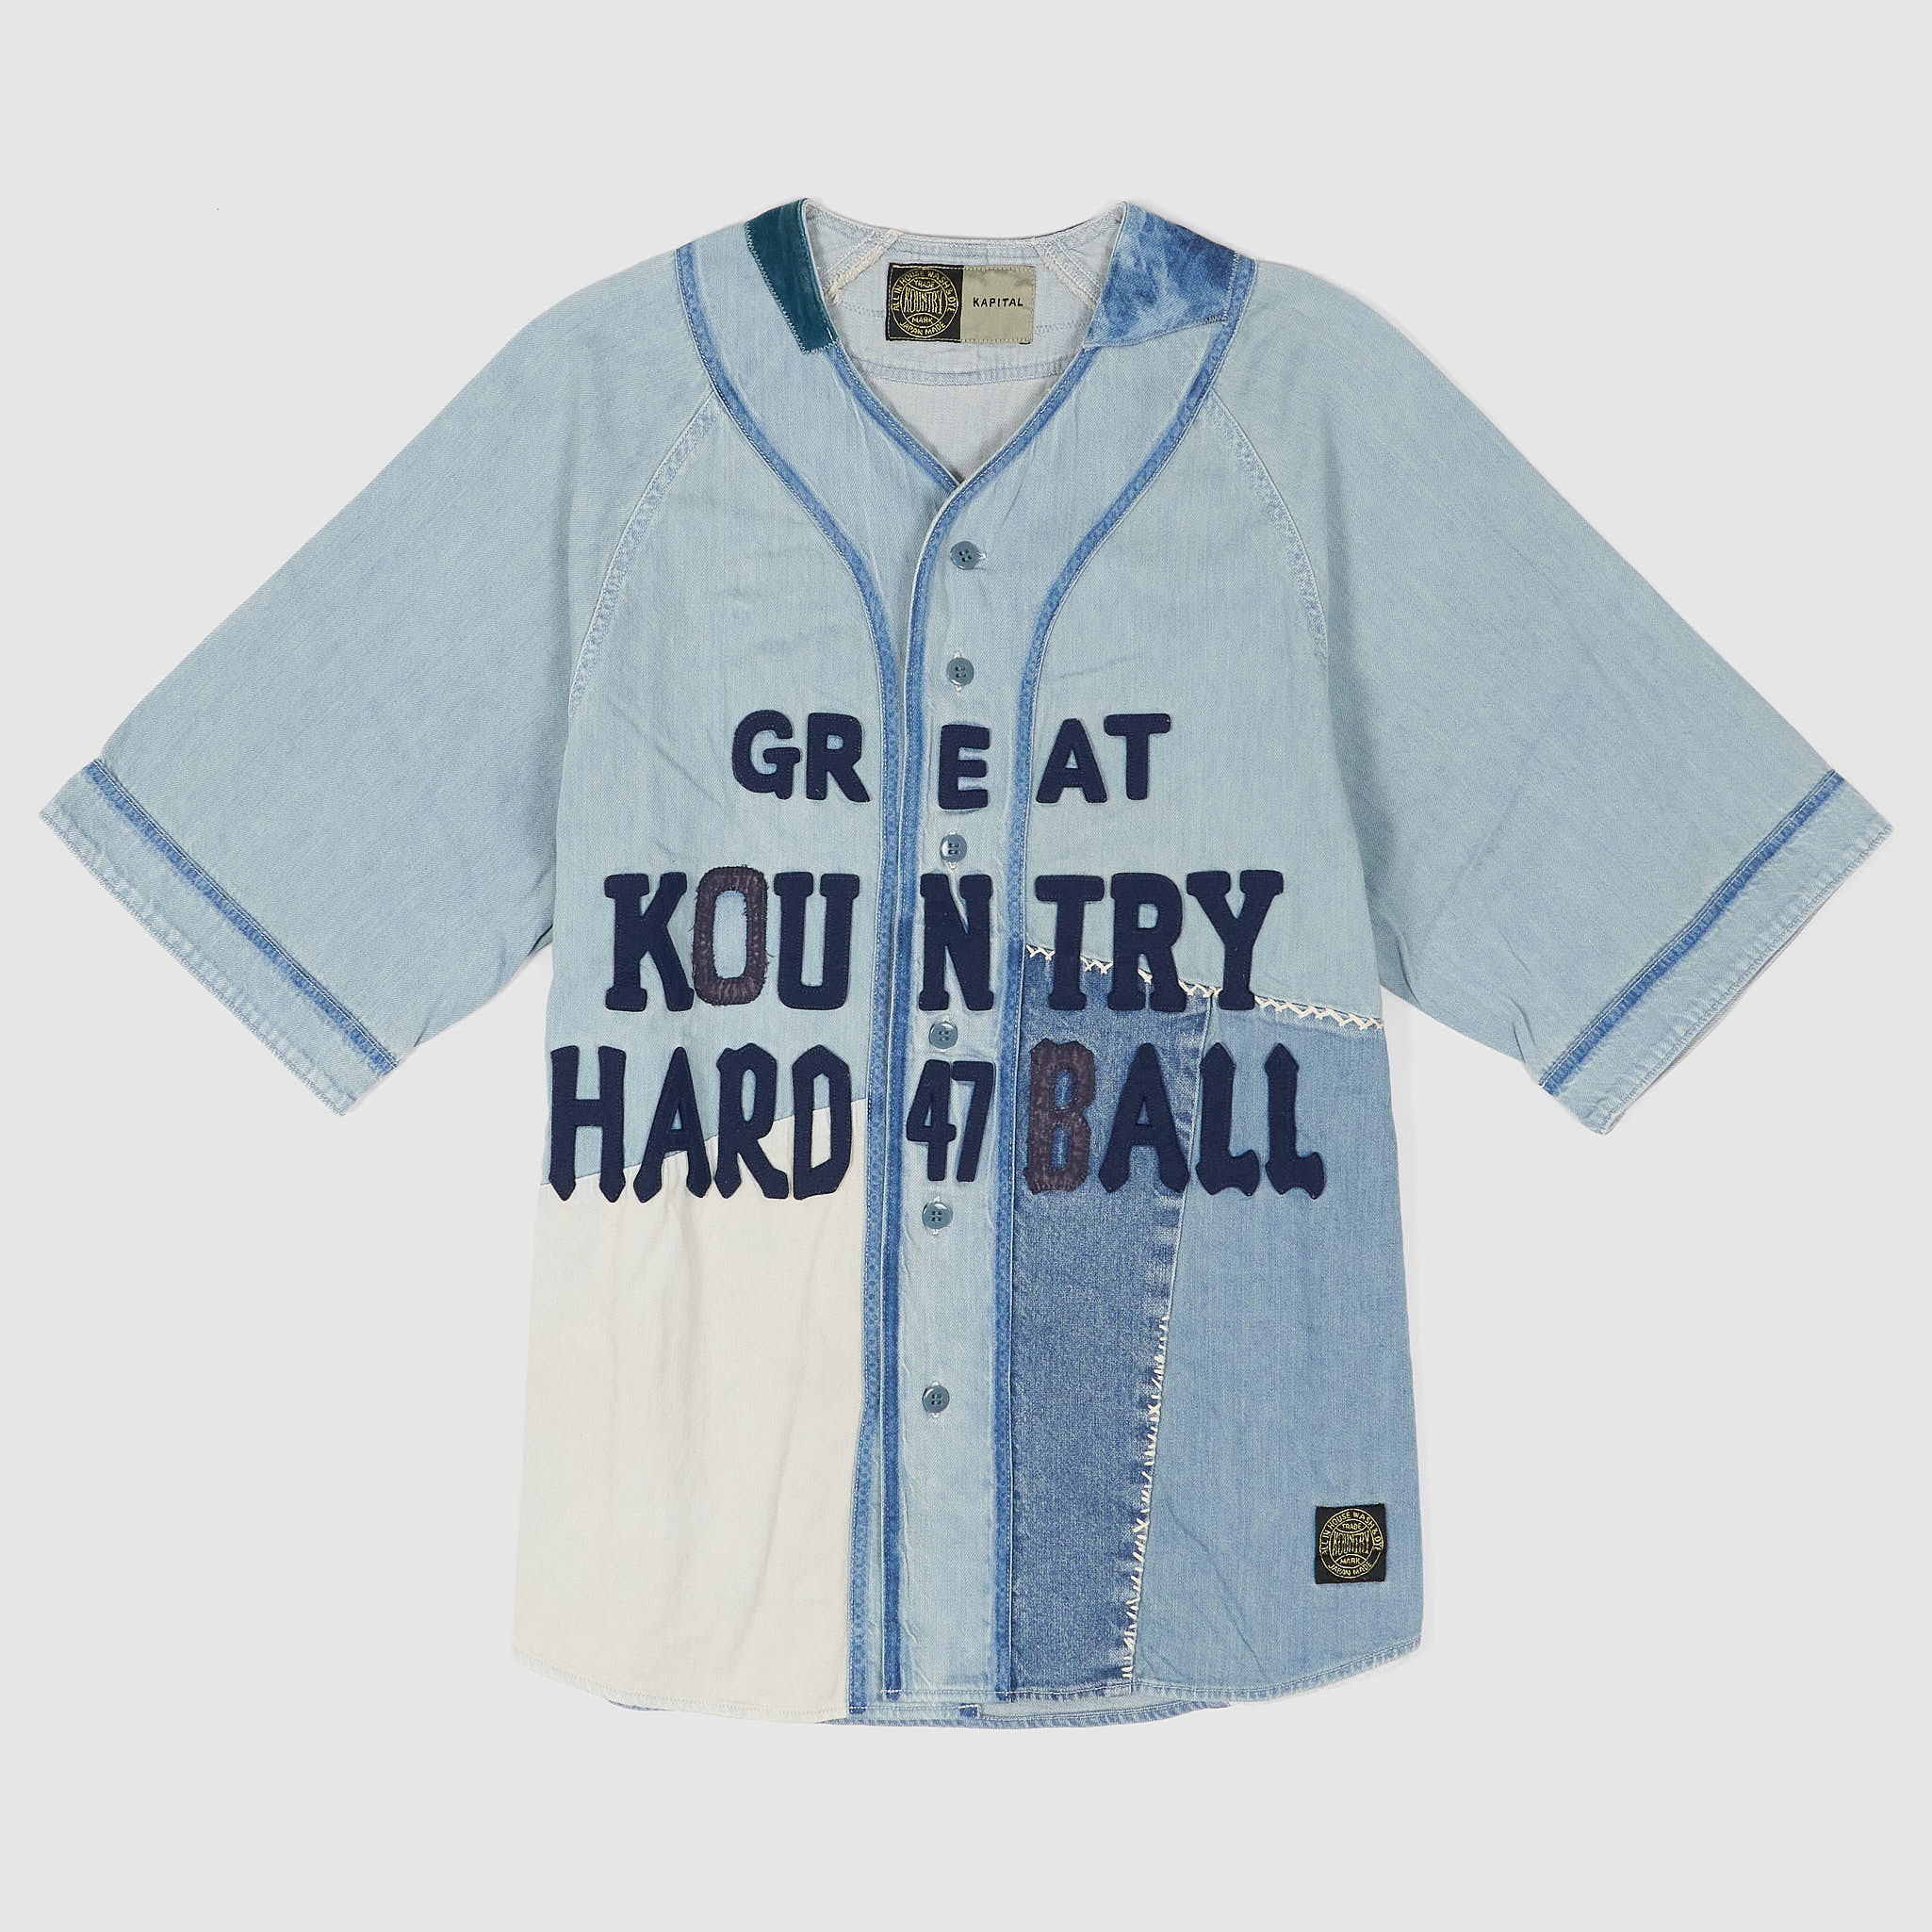 8oz Denim GREAT KOUNTRY Baseball Shirt - Sax/Navy